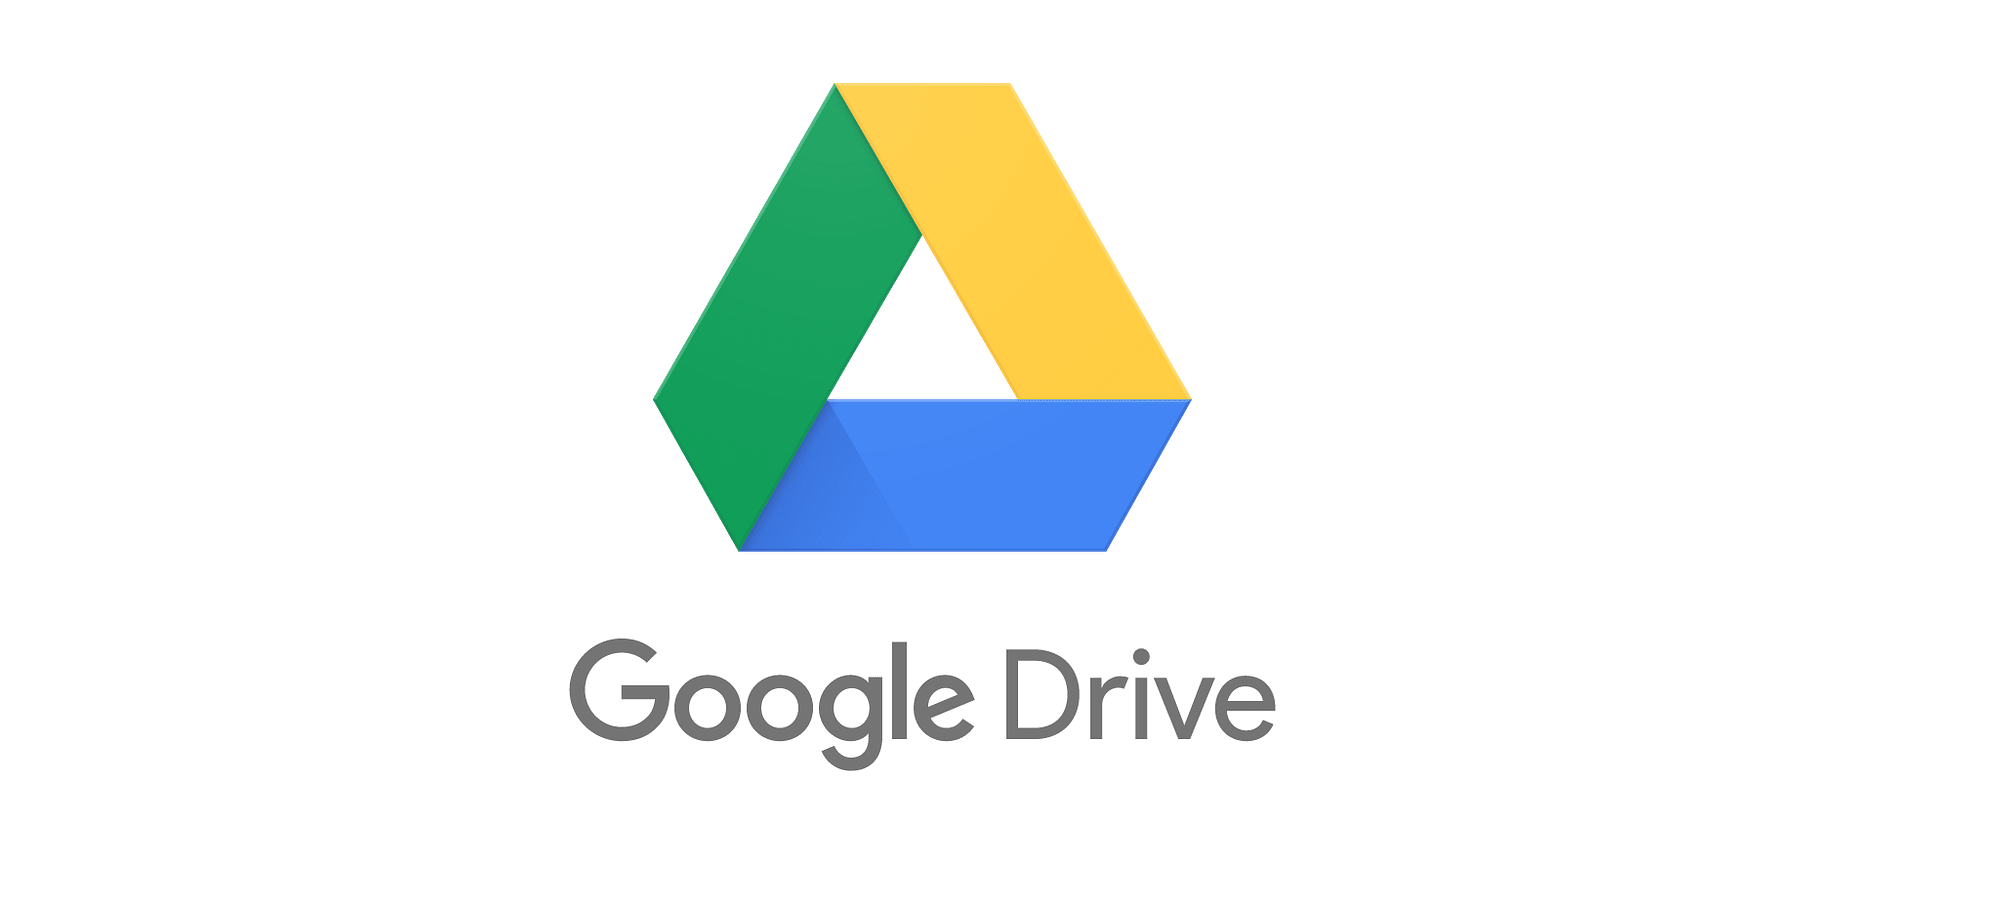 Google Drive logo in beeld